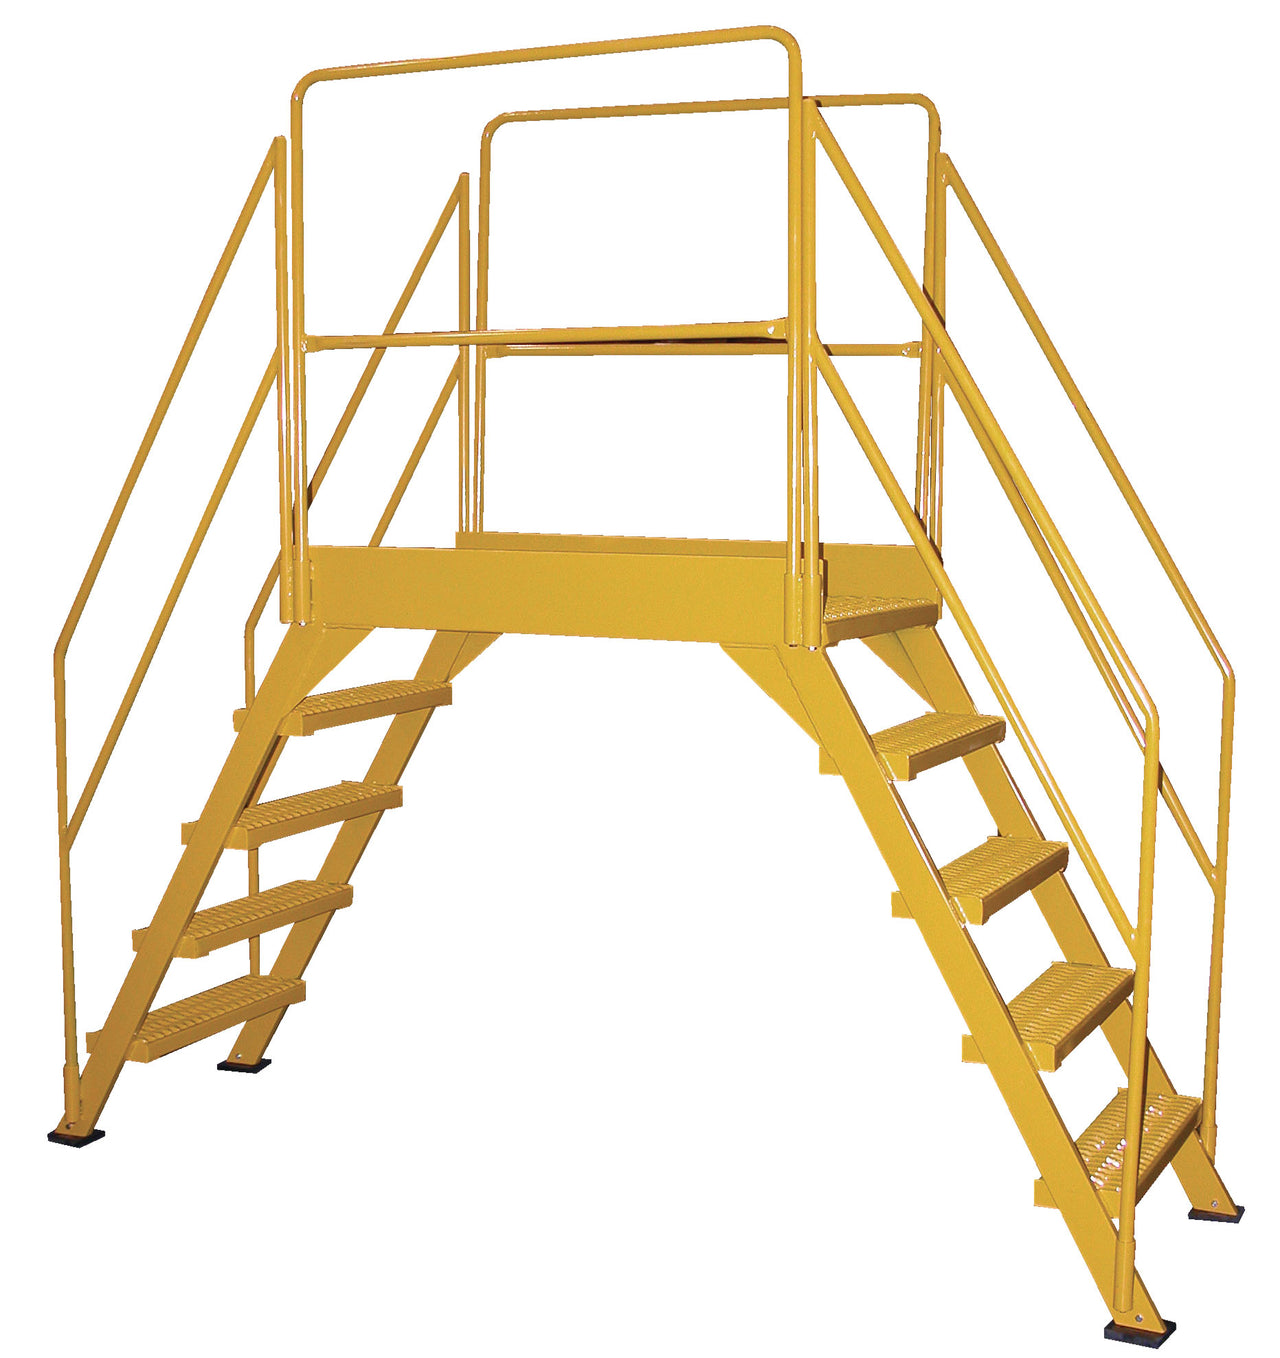 4 Step Cross-Over Ladder w/ 24" Deck